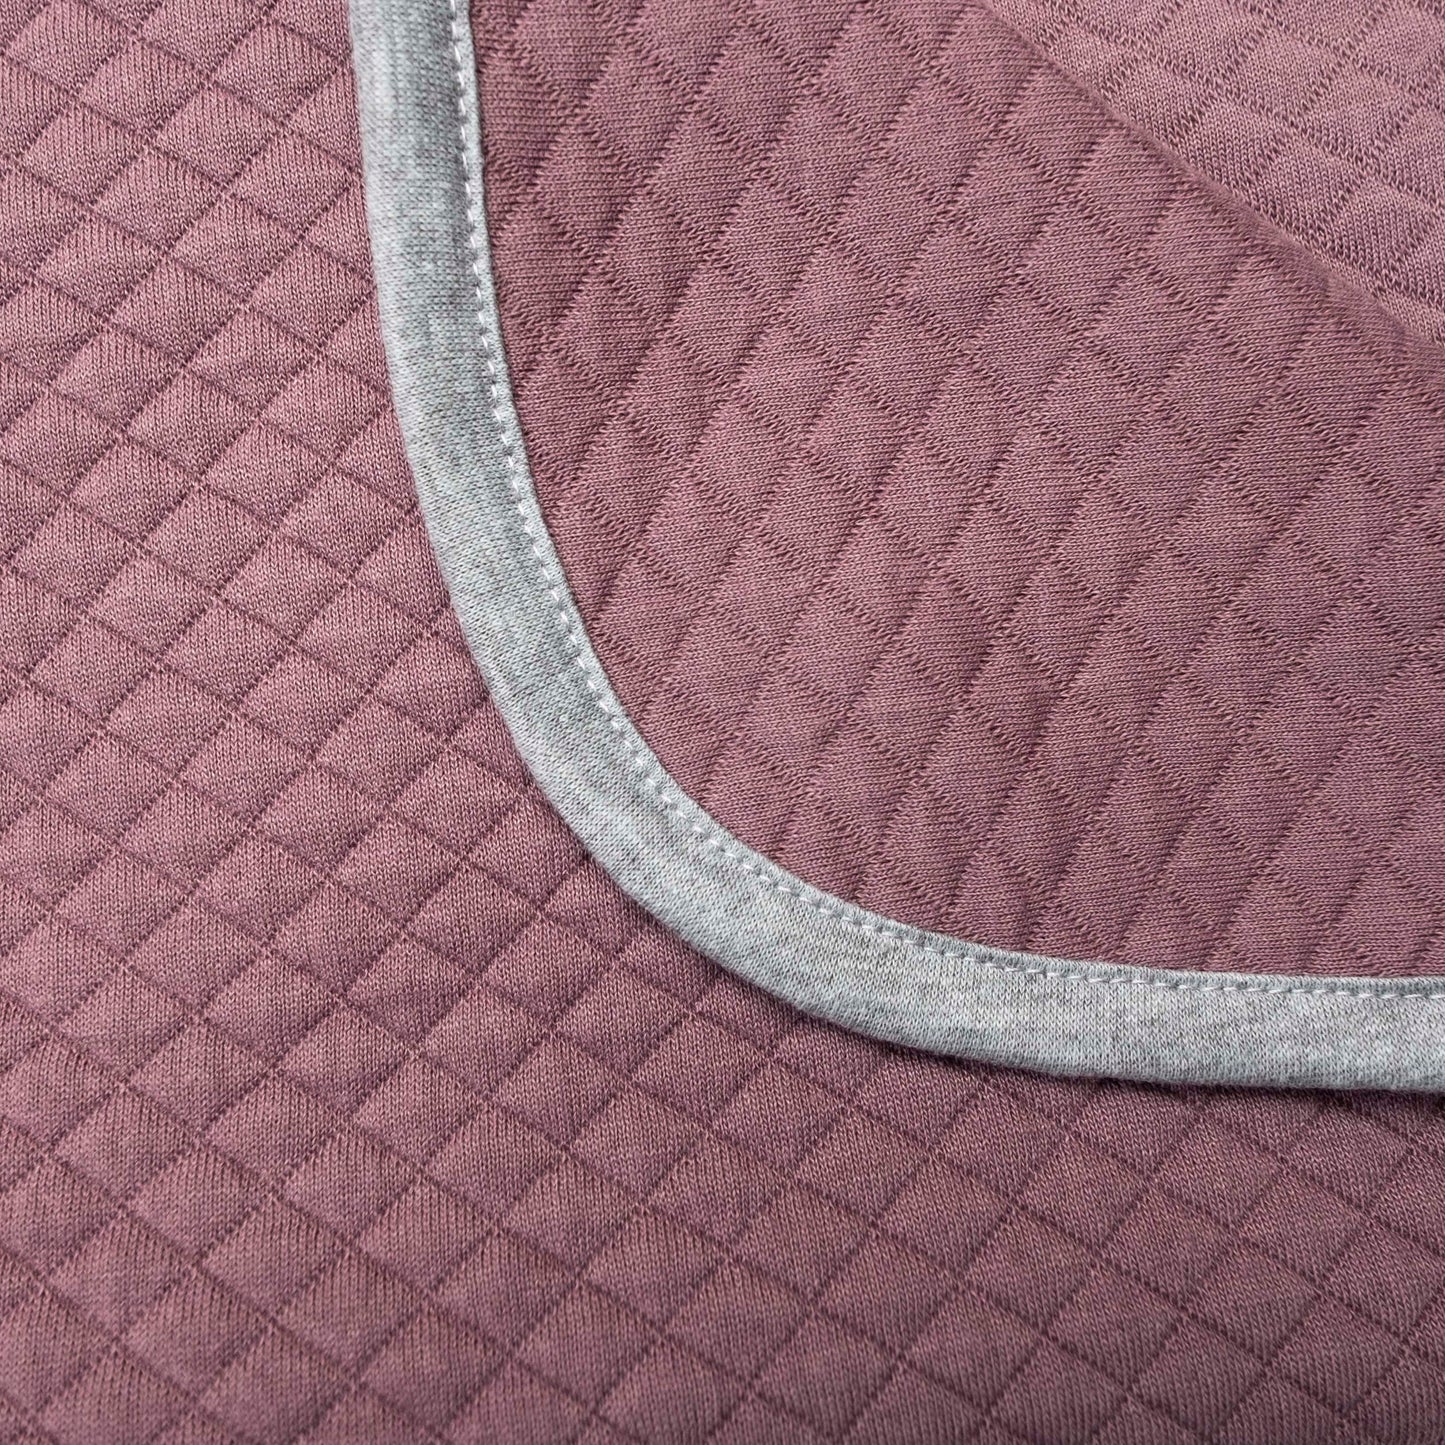 Maison Elmesa On-The-Go Blanket - Pink Coral Texture